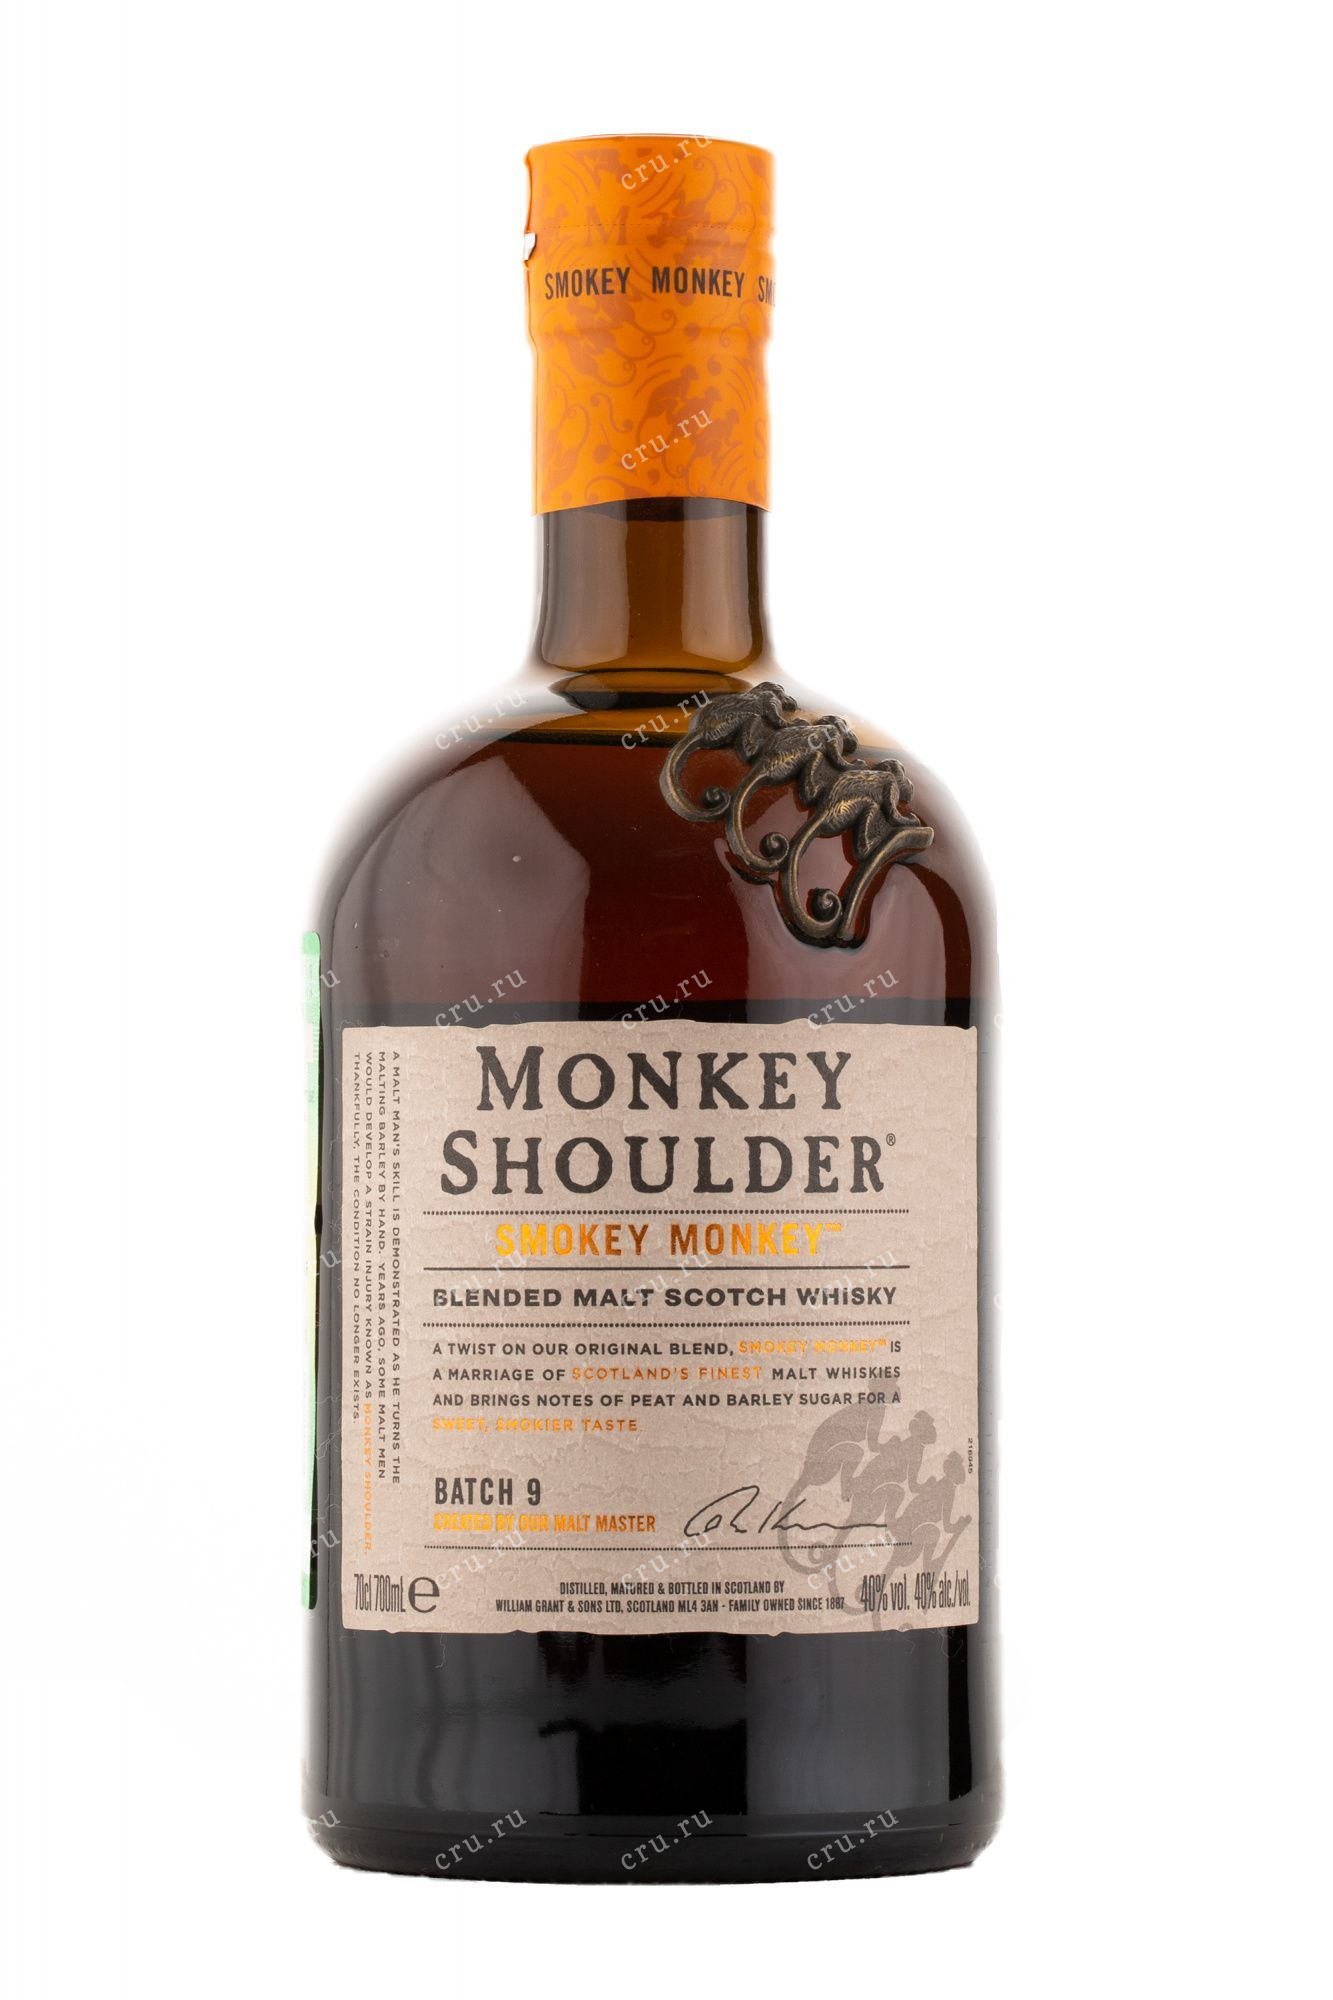 Манки шолдер 0.7. Виски Monkey Shoulder, 0.7 л. Виски манки шолдер Смоки. Виски манки шолдер 0.7. Виски манки шолдер 0,7л 40%.